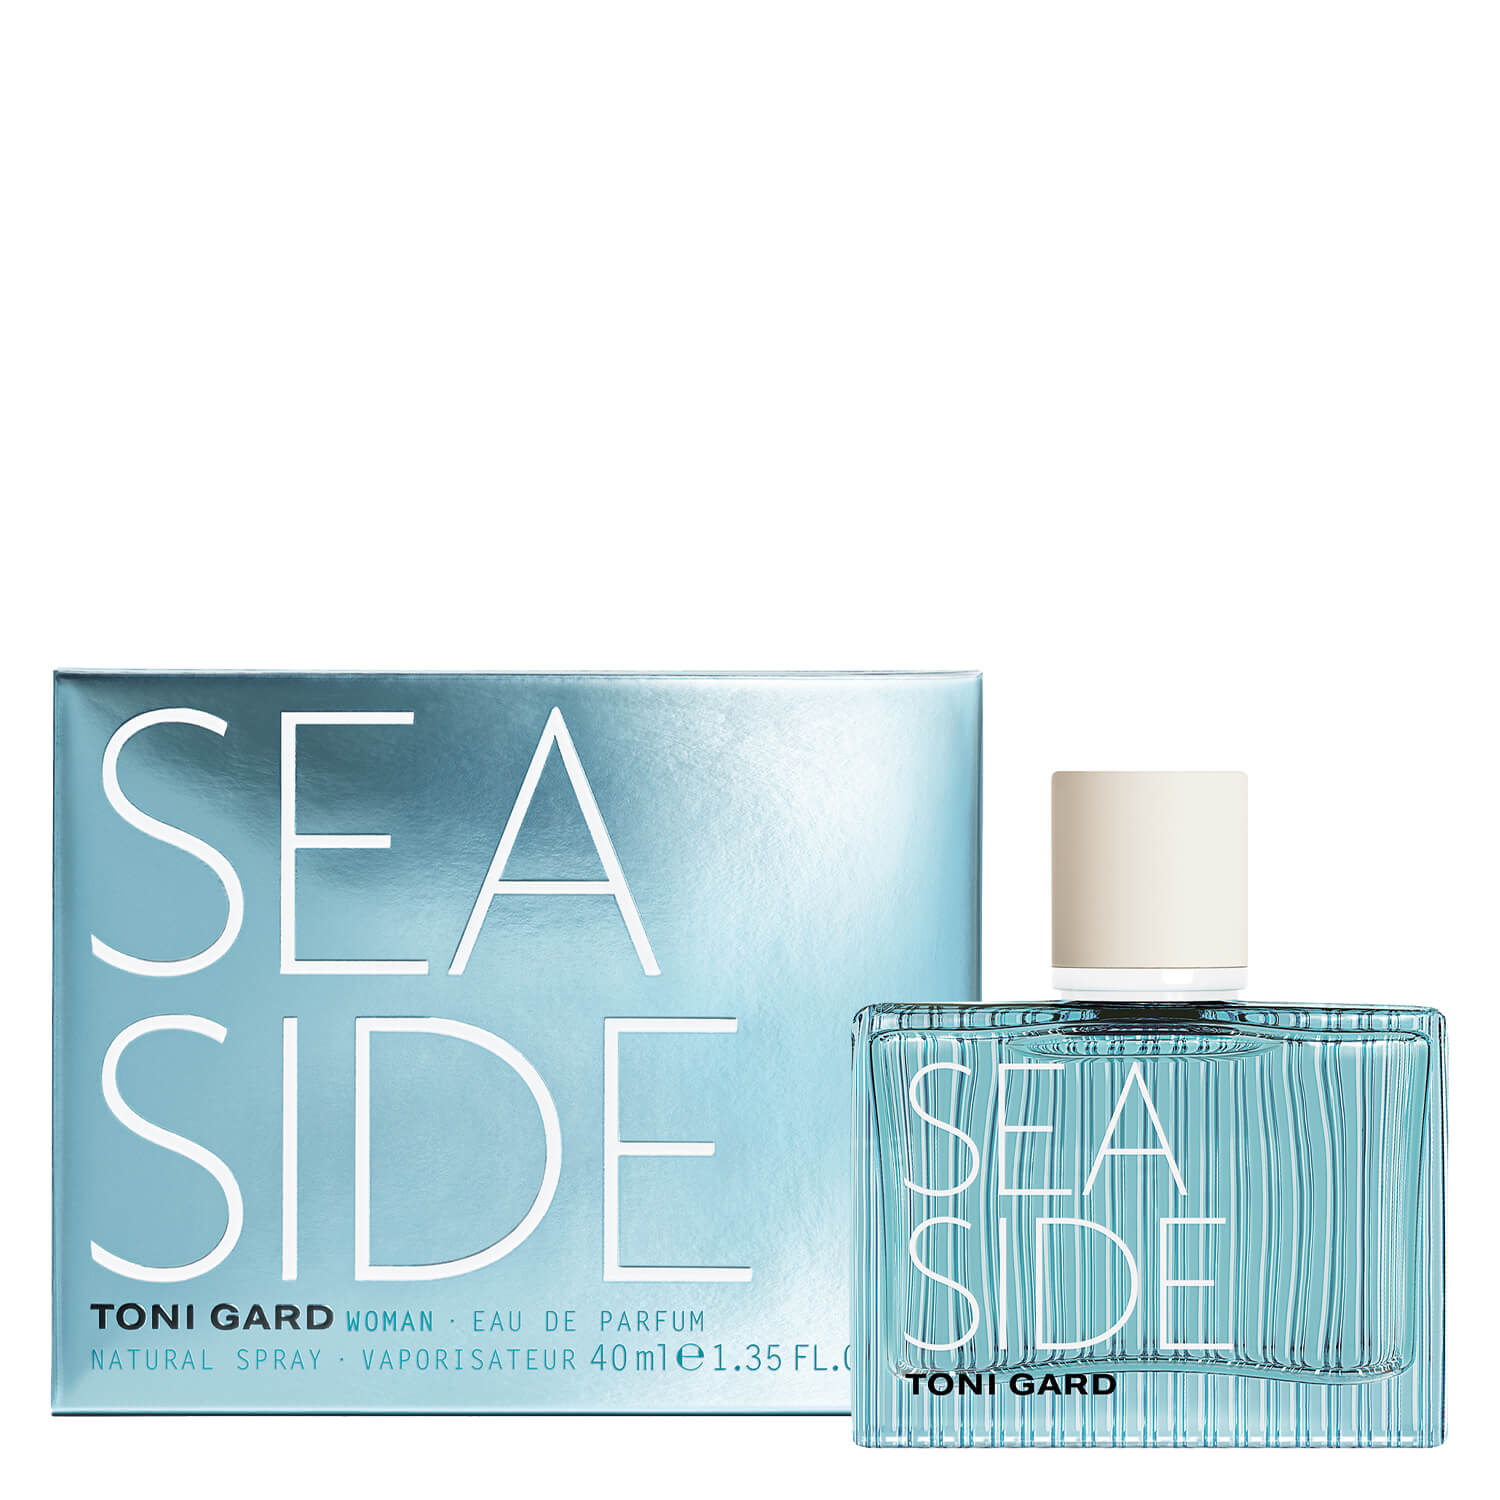 Sea de GARD Woman TONI - Parfum Side Eau